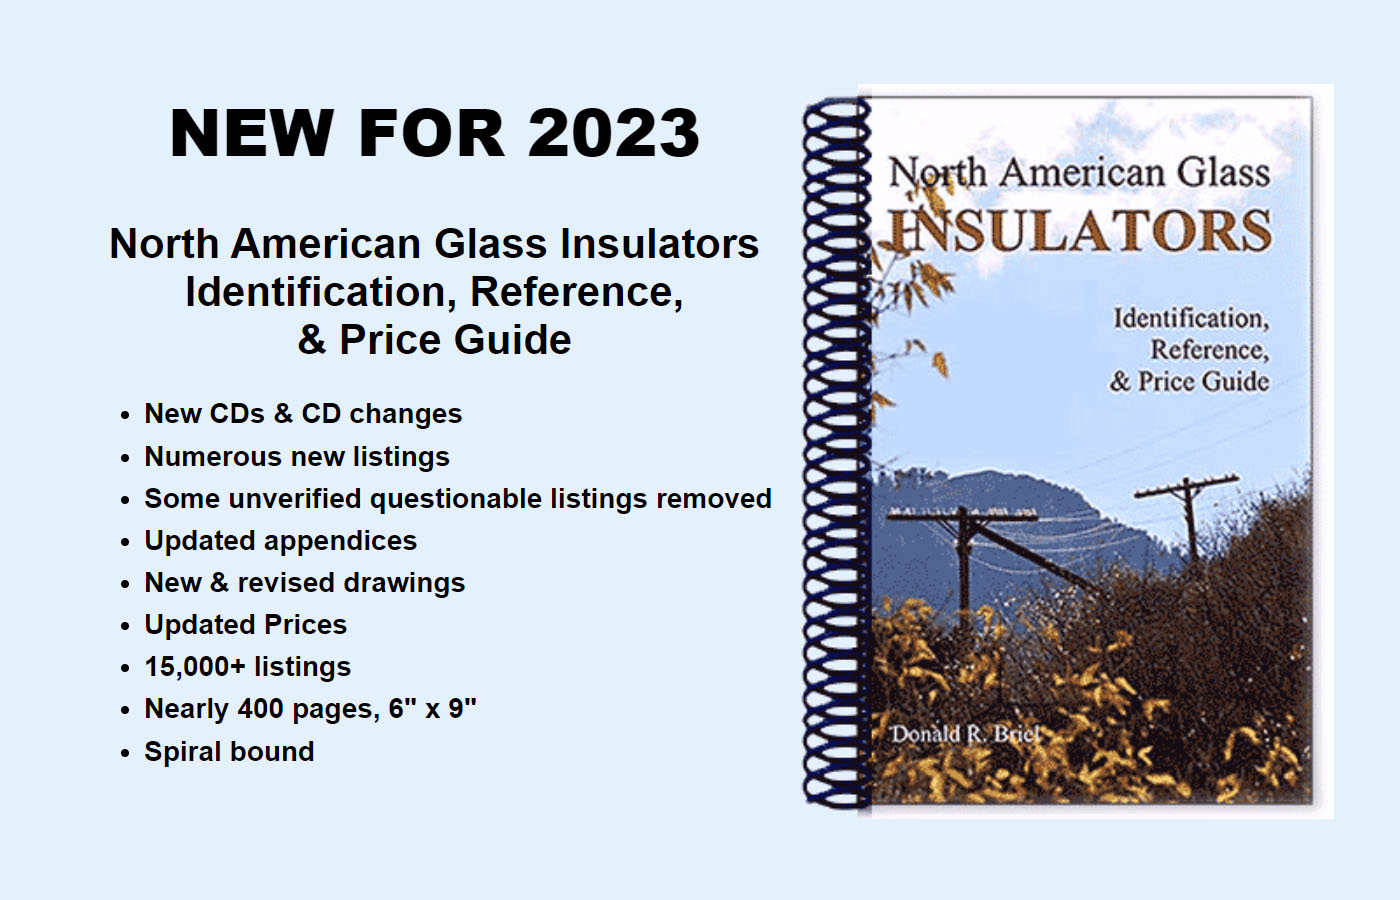 Glass Insulator Price Guide: North American Glass Insulators - Identification, Reference, & Price Guide